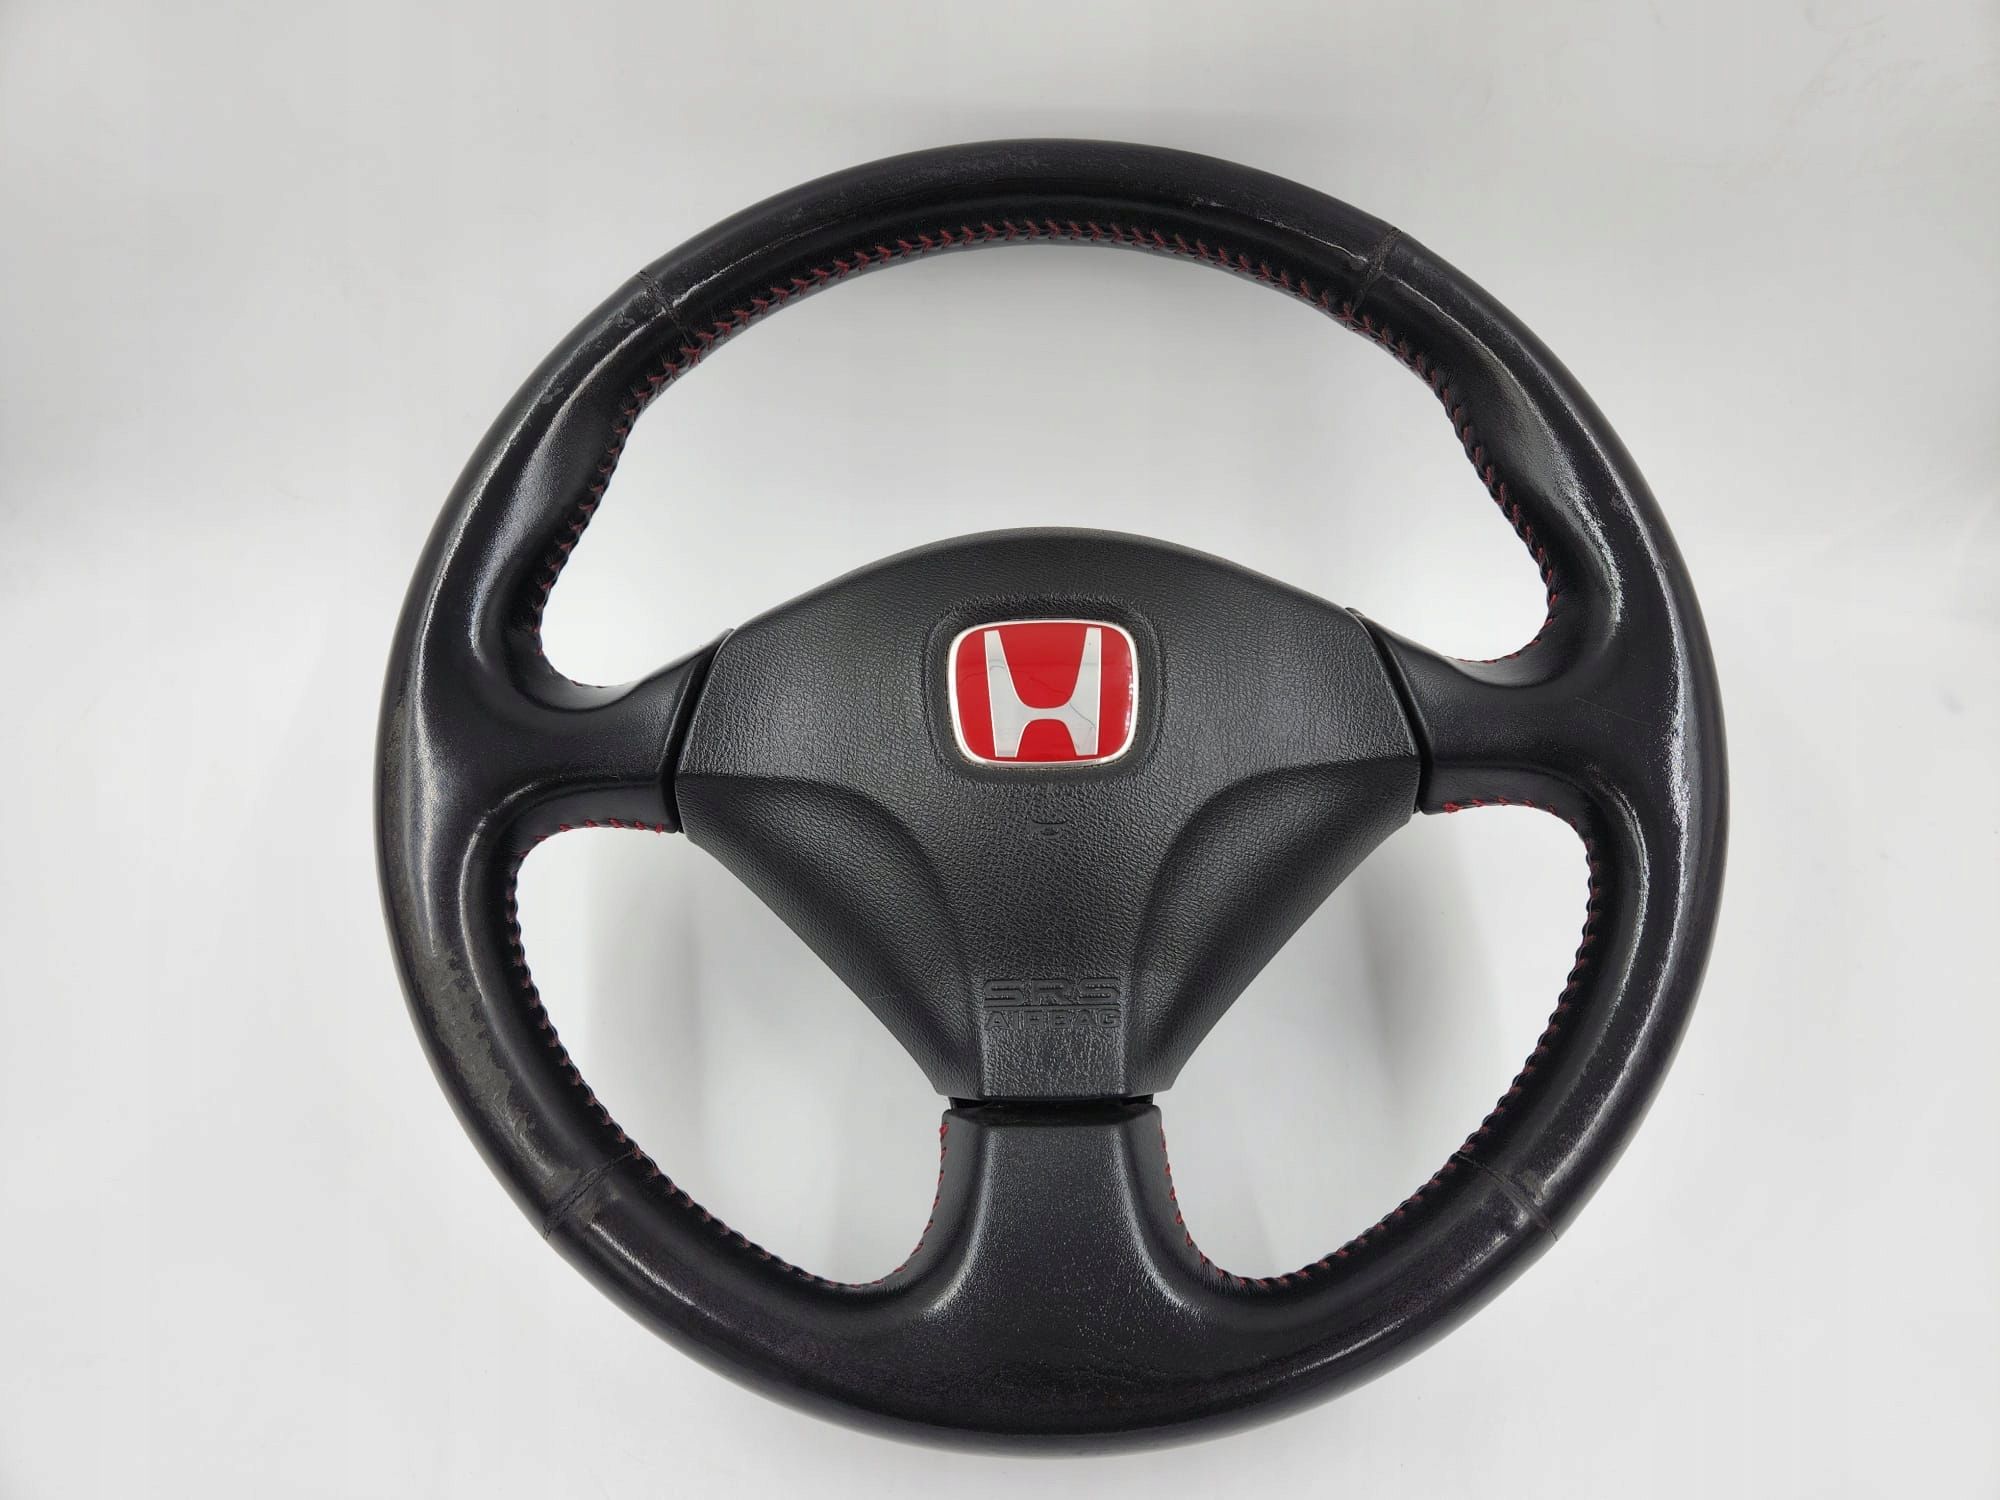 Honda Civic Vii kierownica skórzana type-s type-r Ep3 typer sport komp